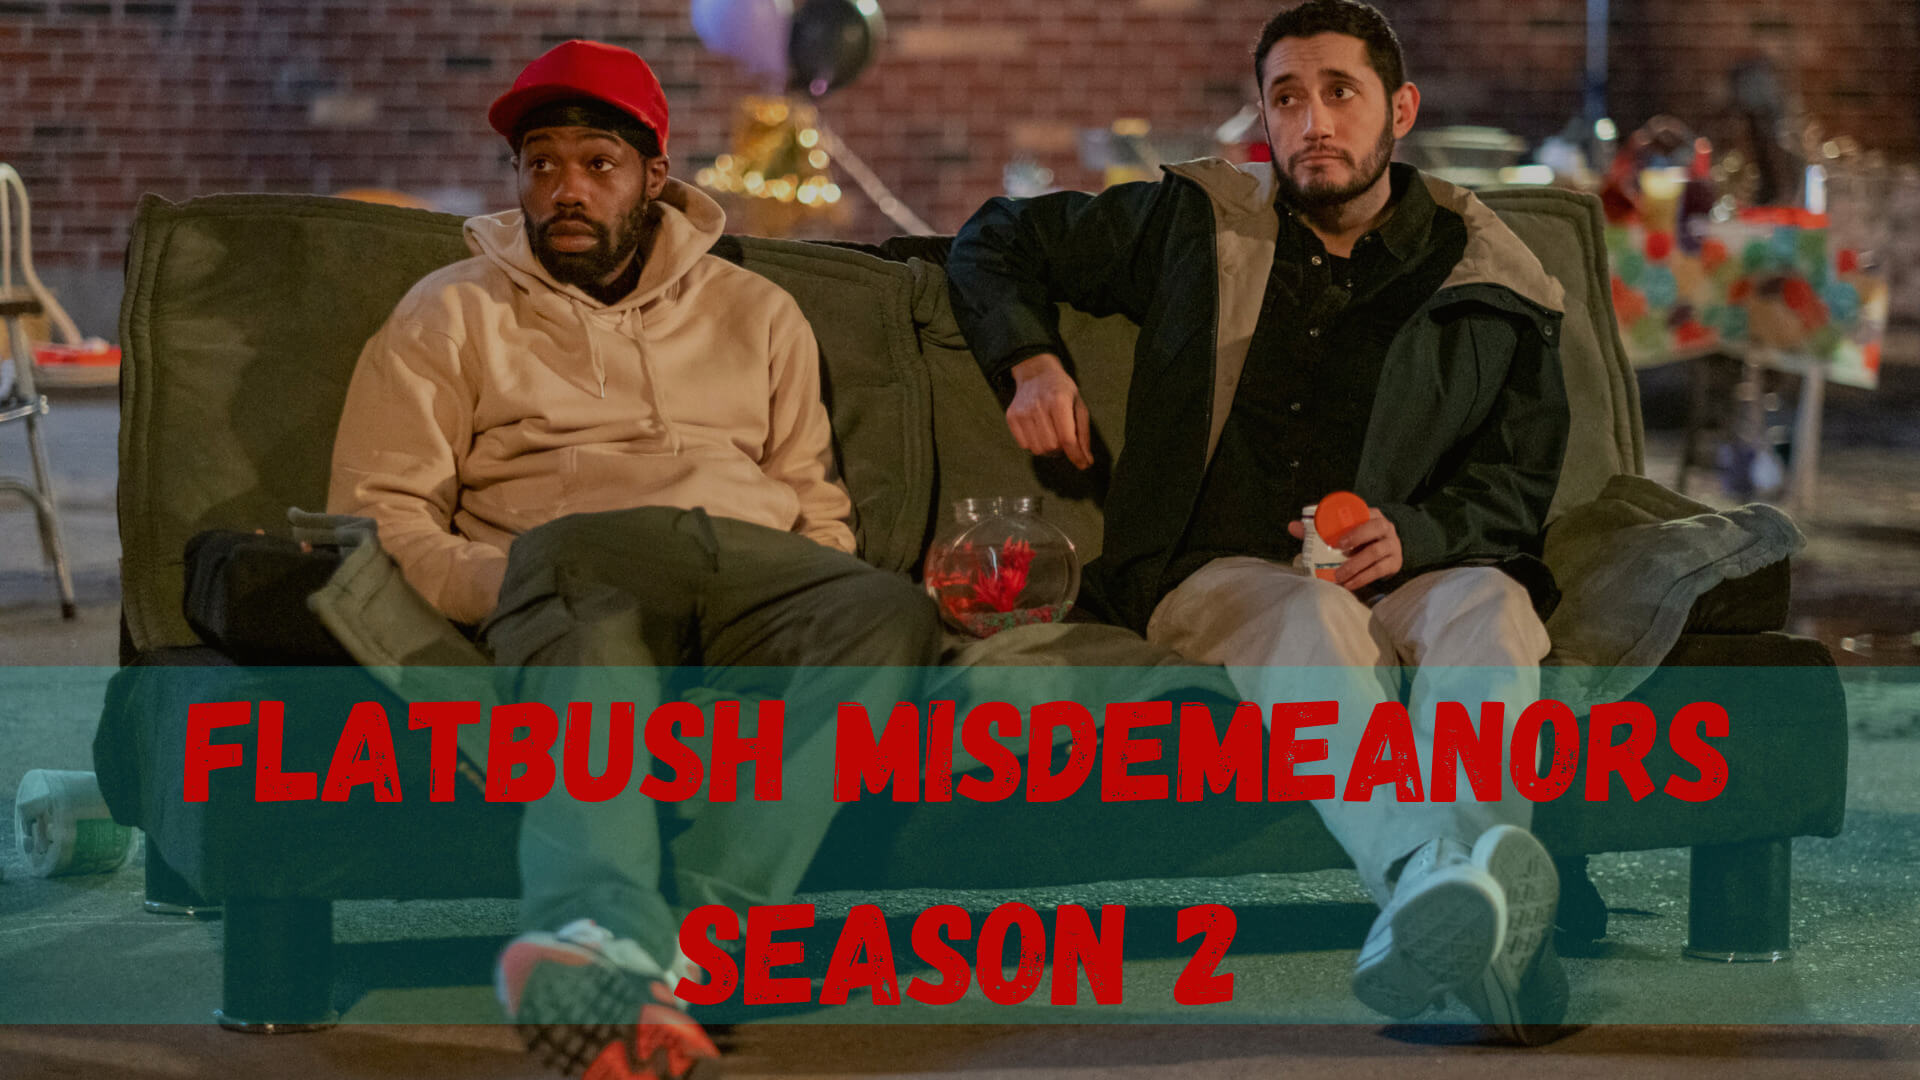 Is There Any News Flatbush Misdemeanors Season 4 Trailer?